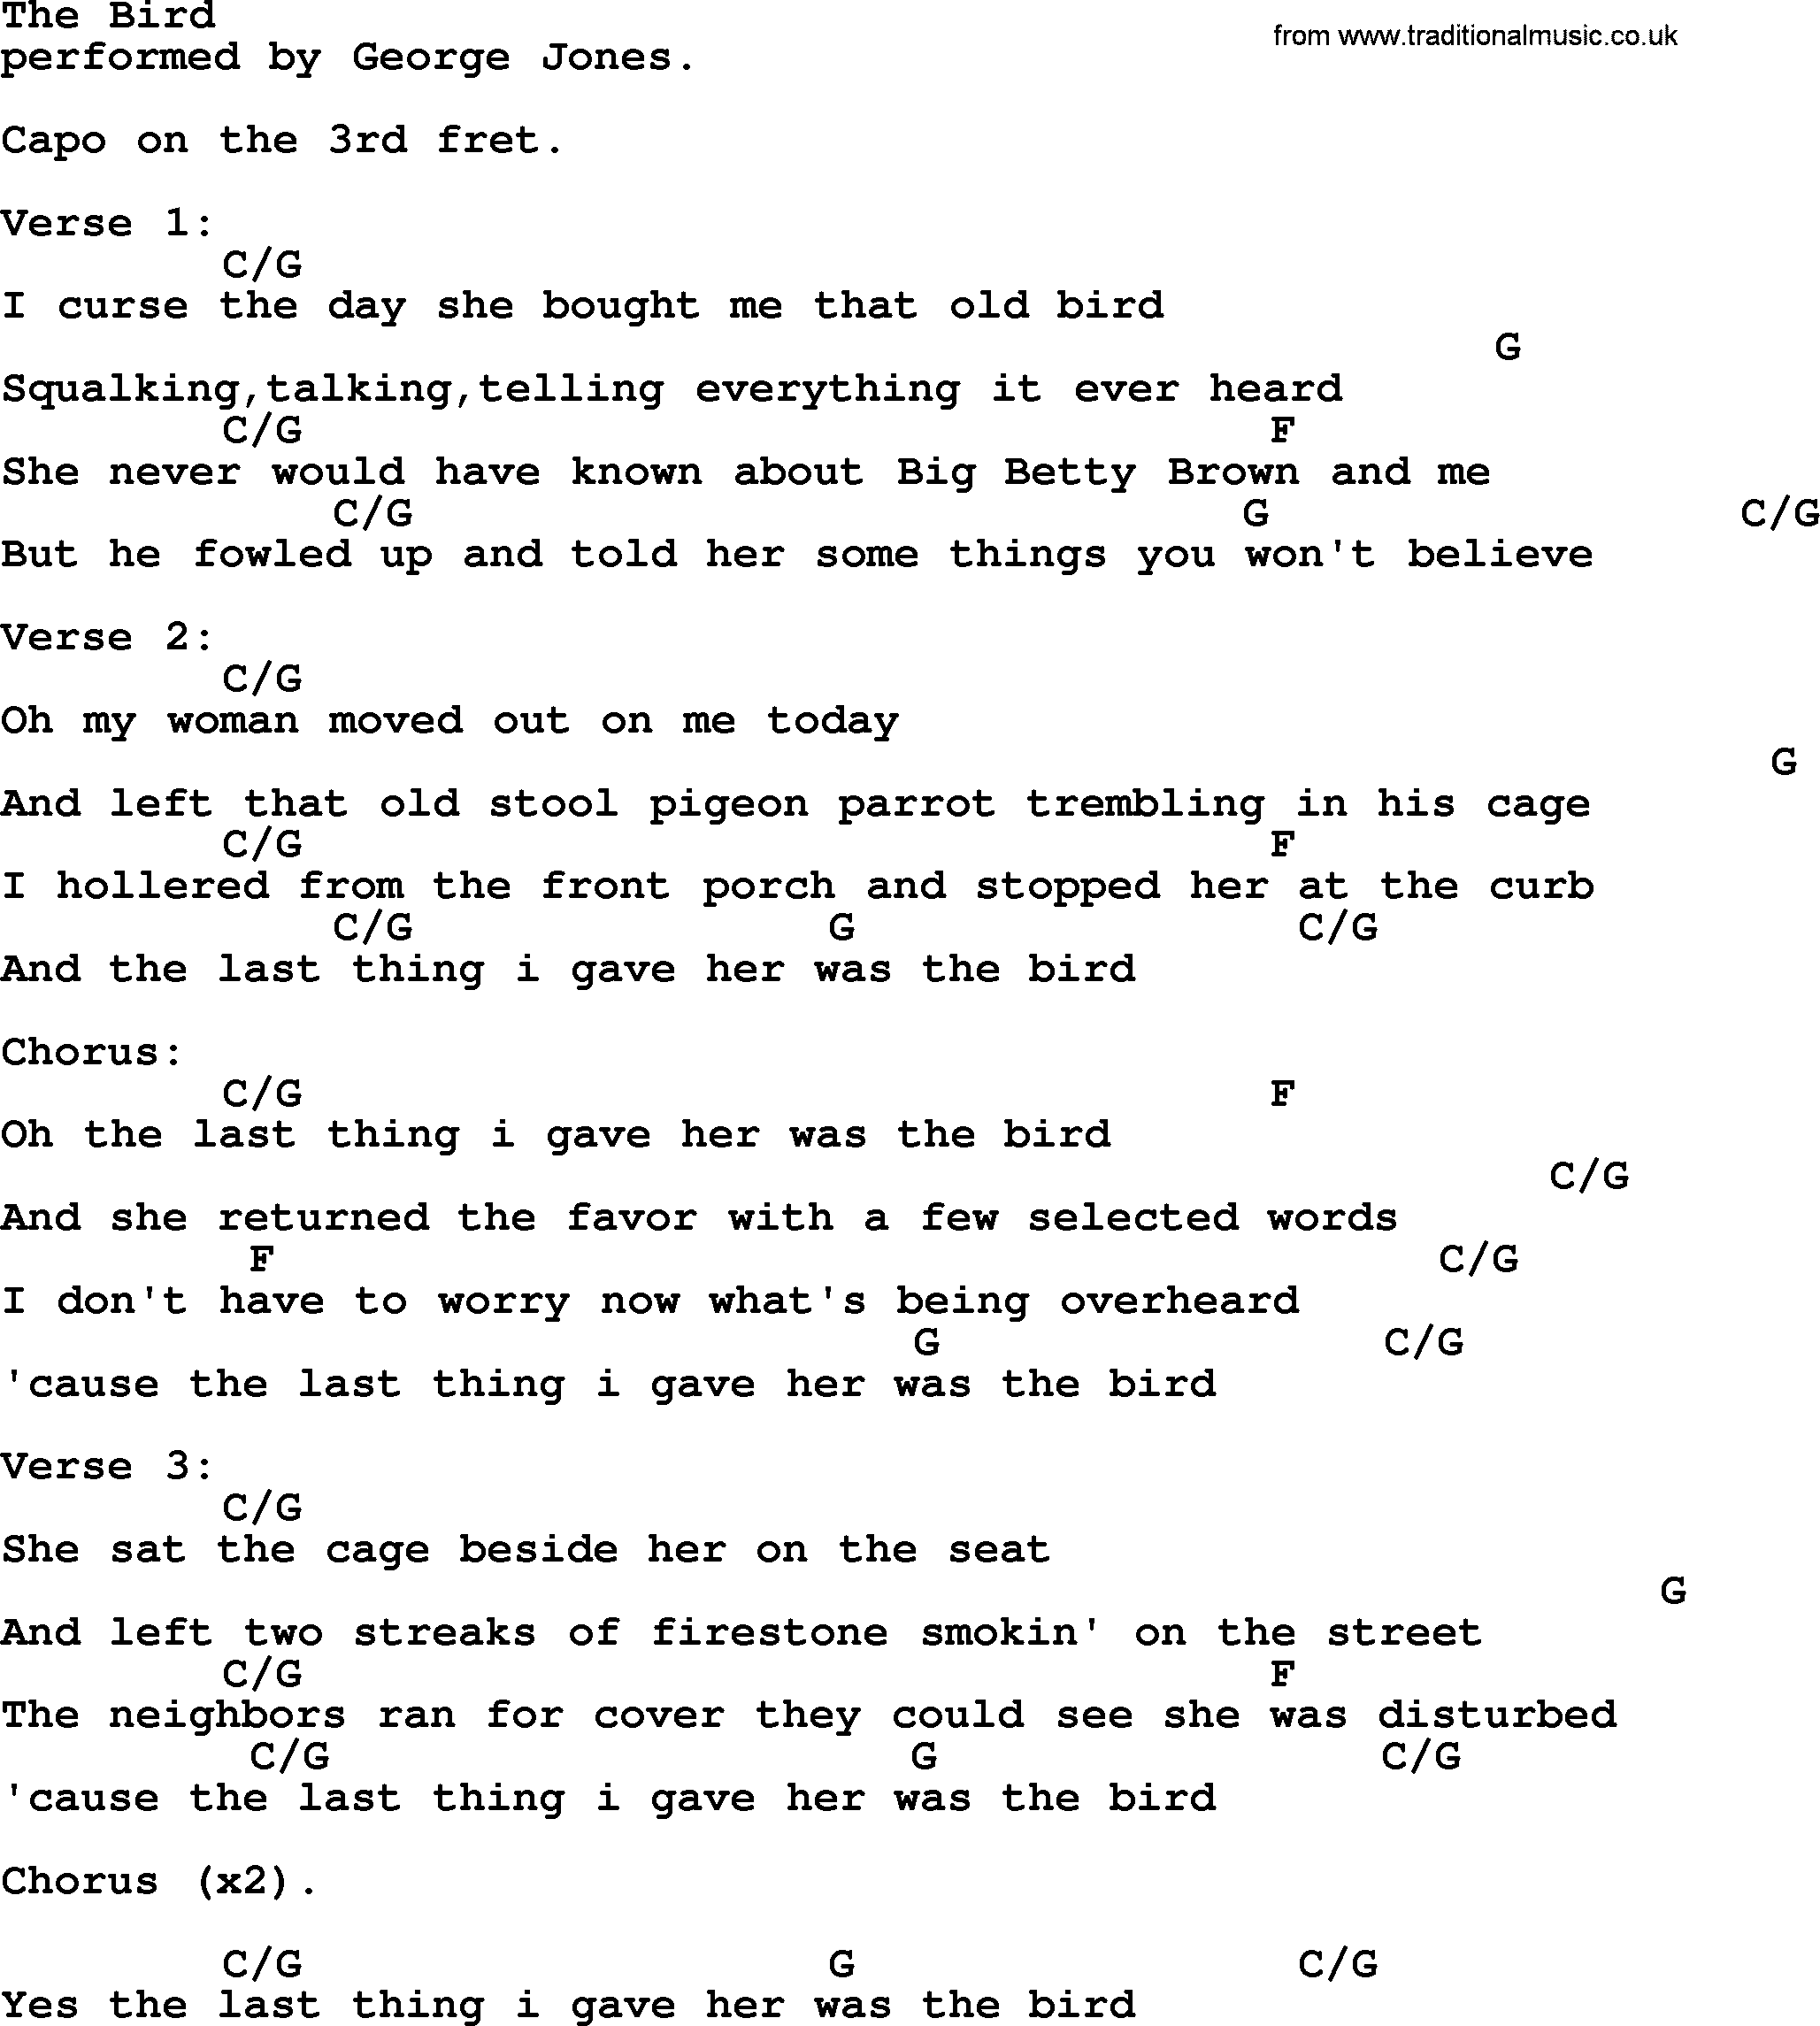 George Jones song: The Bird, lyrics and chords